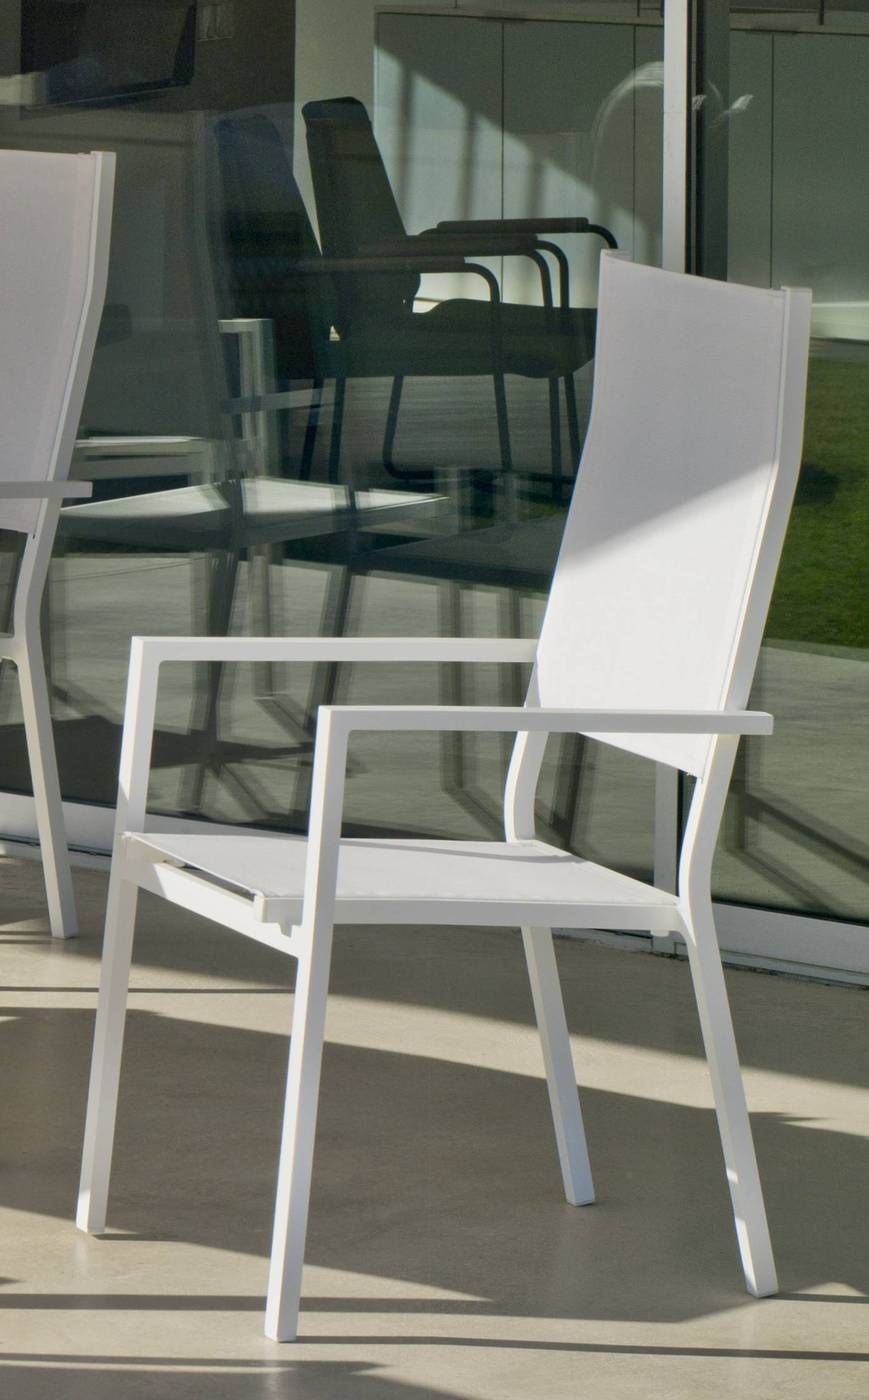 Set California-HPL Janeiro - Conjunto de aluminio para jardín: Mesa redonda con tablero HPL de 100 cm + 4 sillones altos de textilen. Colores: blanco y antracita.